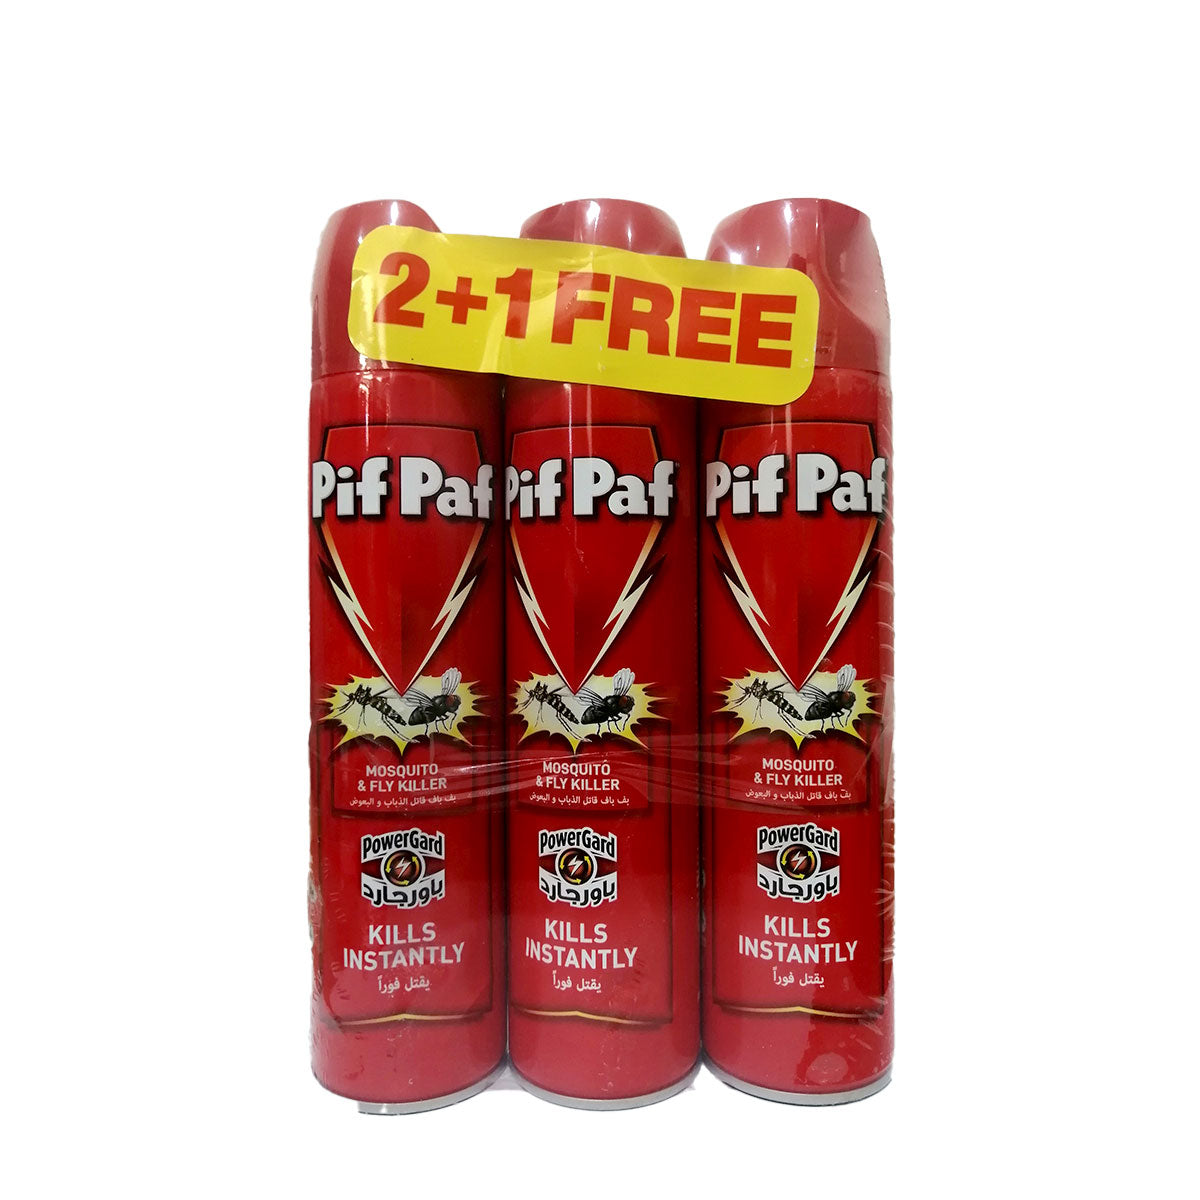 Pif Paf Mosquito & Fly Killer PowerGard Kills Instantly 400 x 3 ml 2+1 Free بيف باف قاتل البعوض والذباب باورجارد يقتل فورًا 2 + 1 مجانا